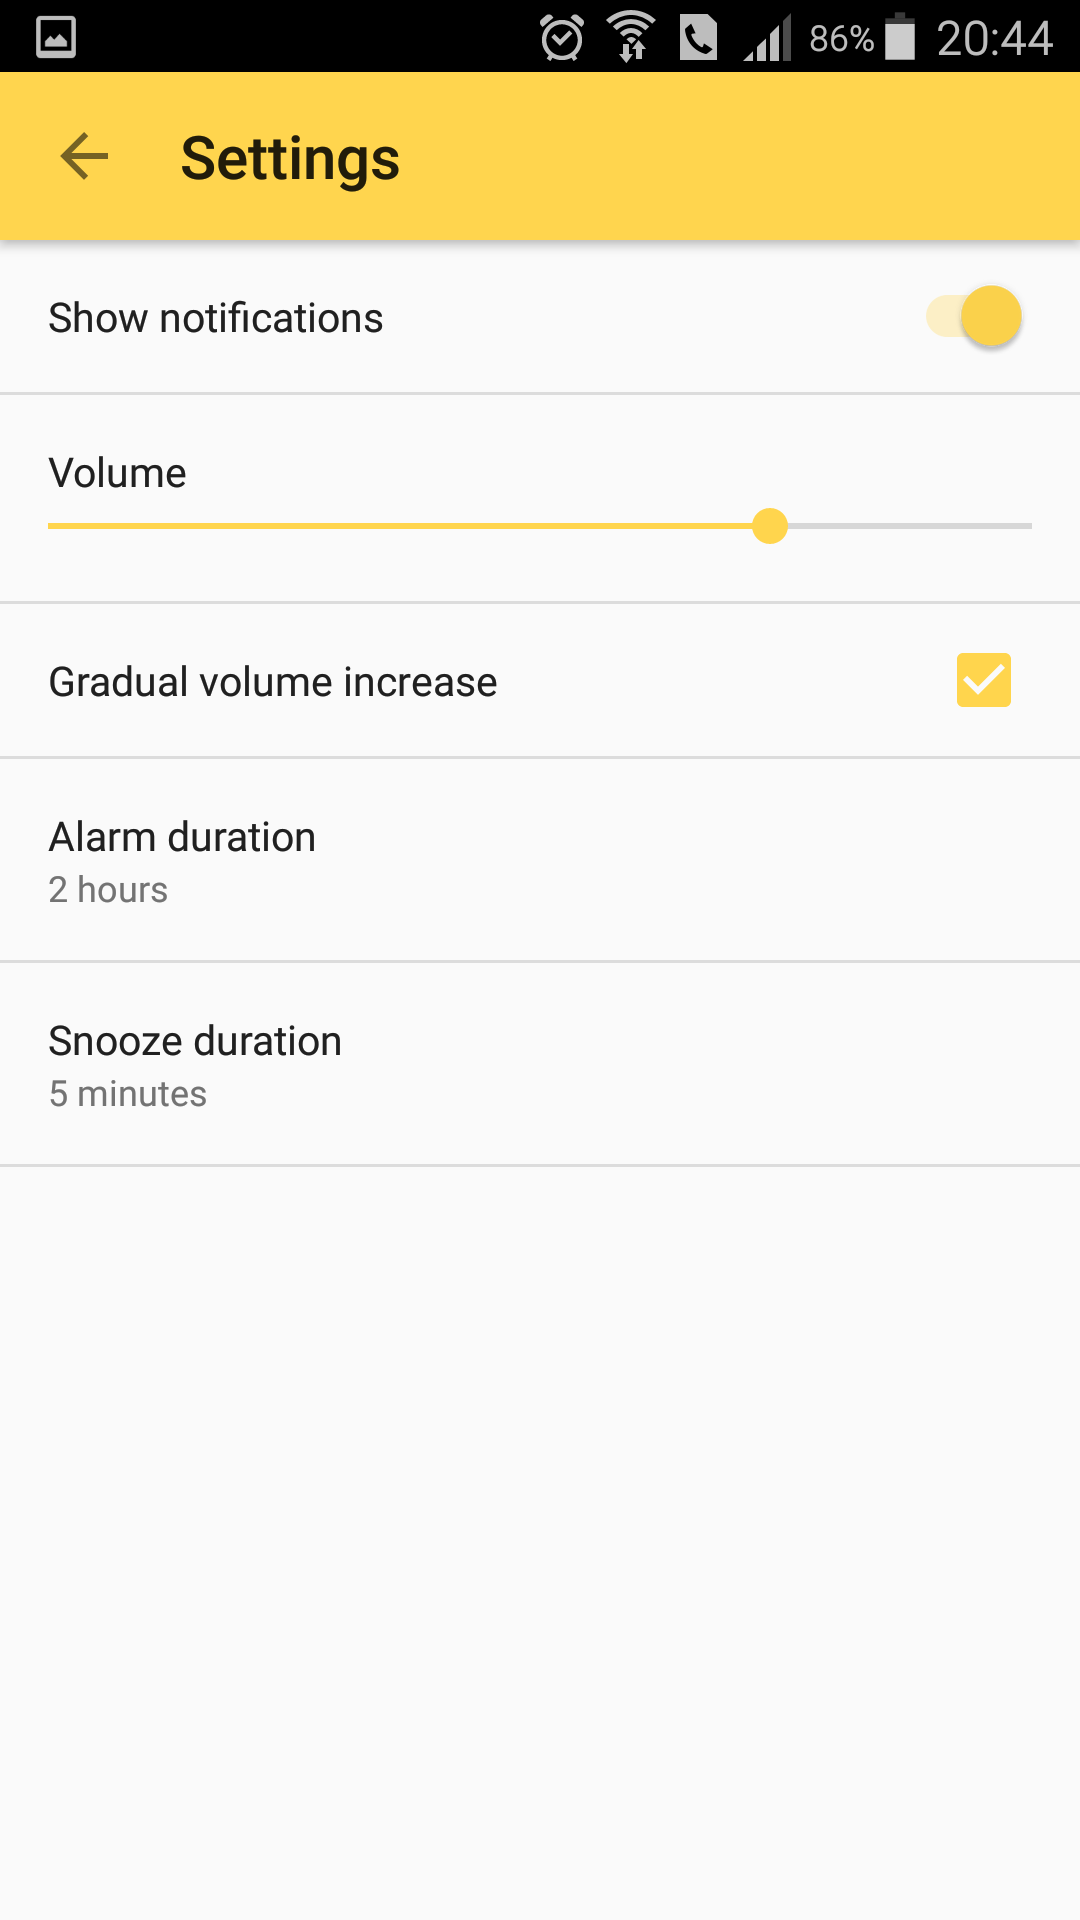 top microsoft apps microsoft mimicker alarm screenshot android